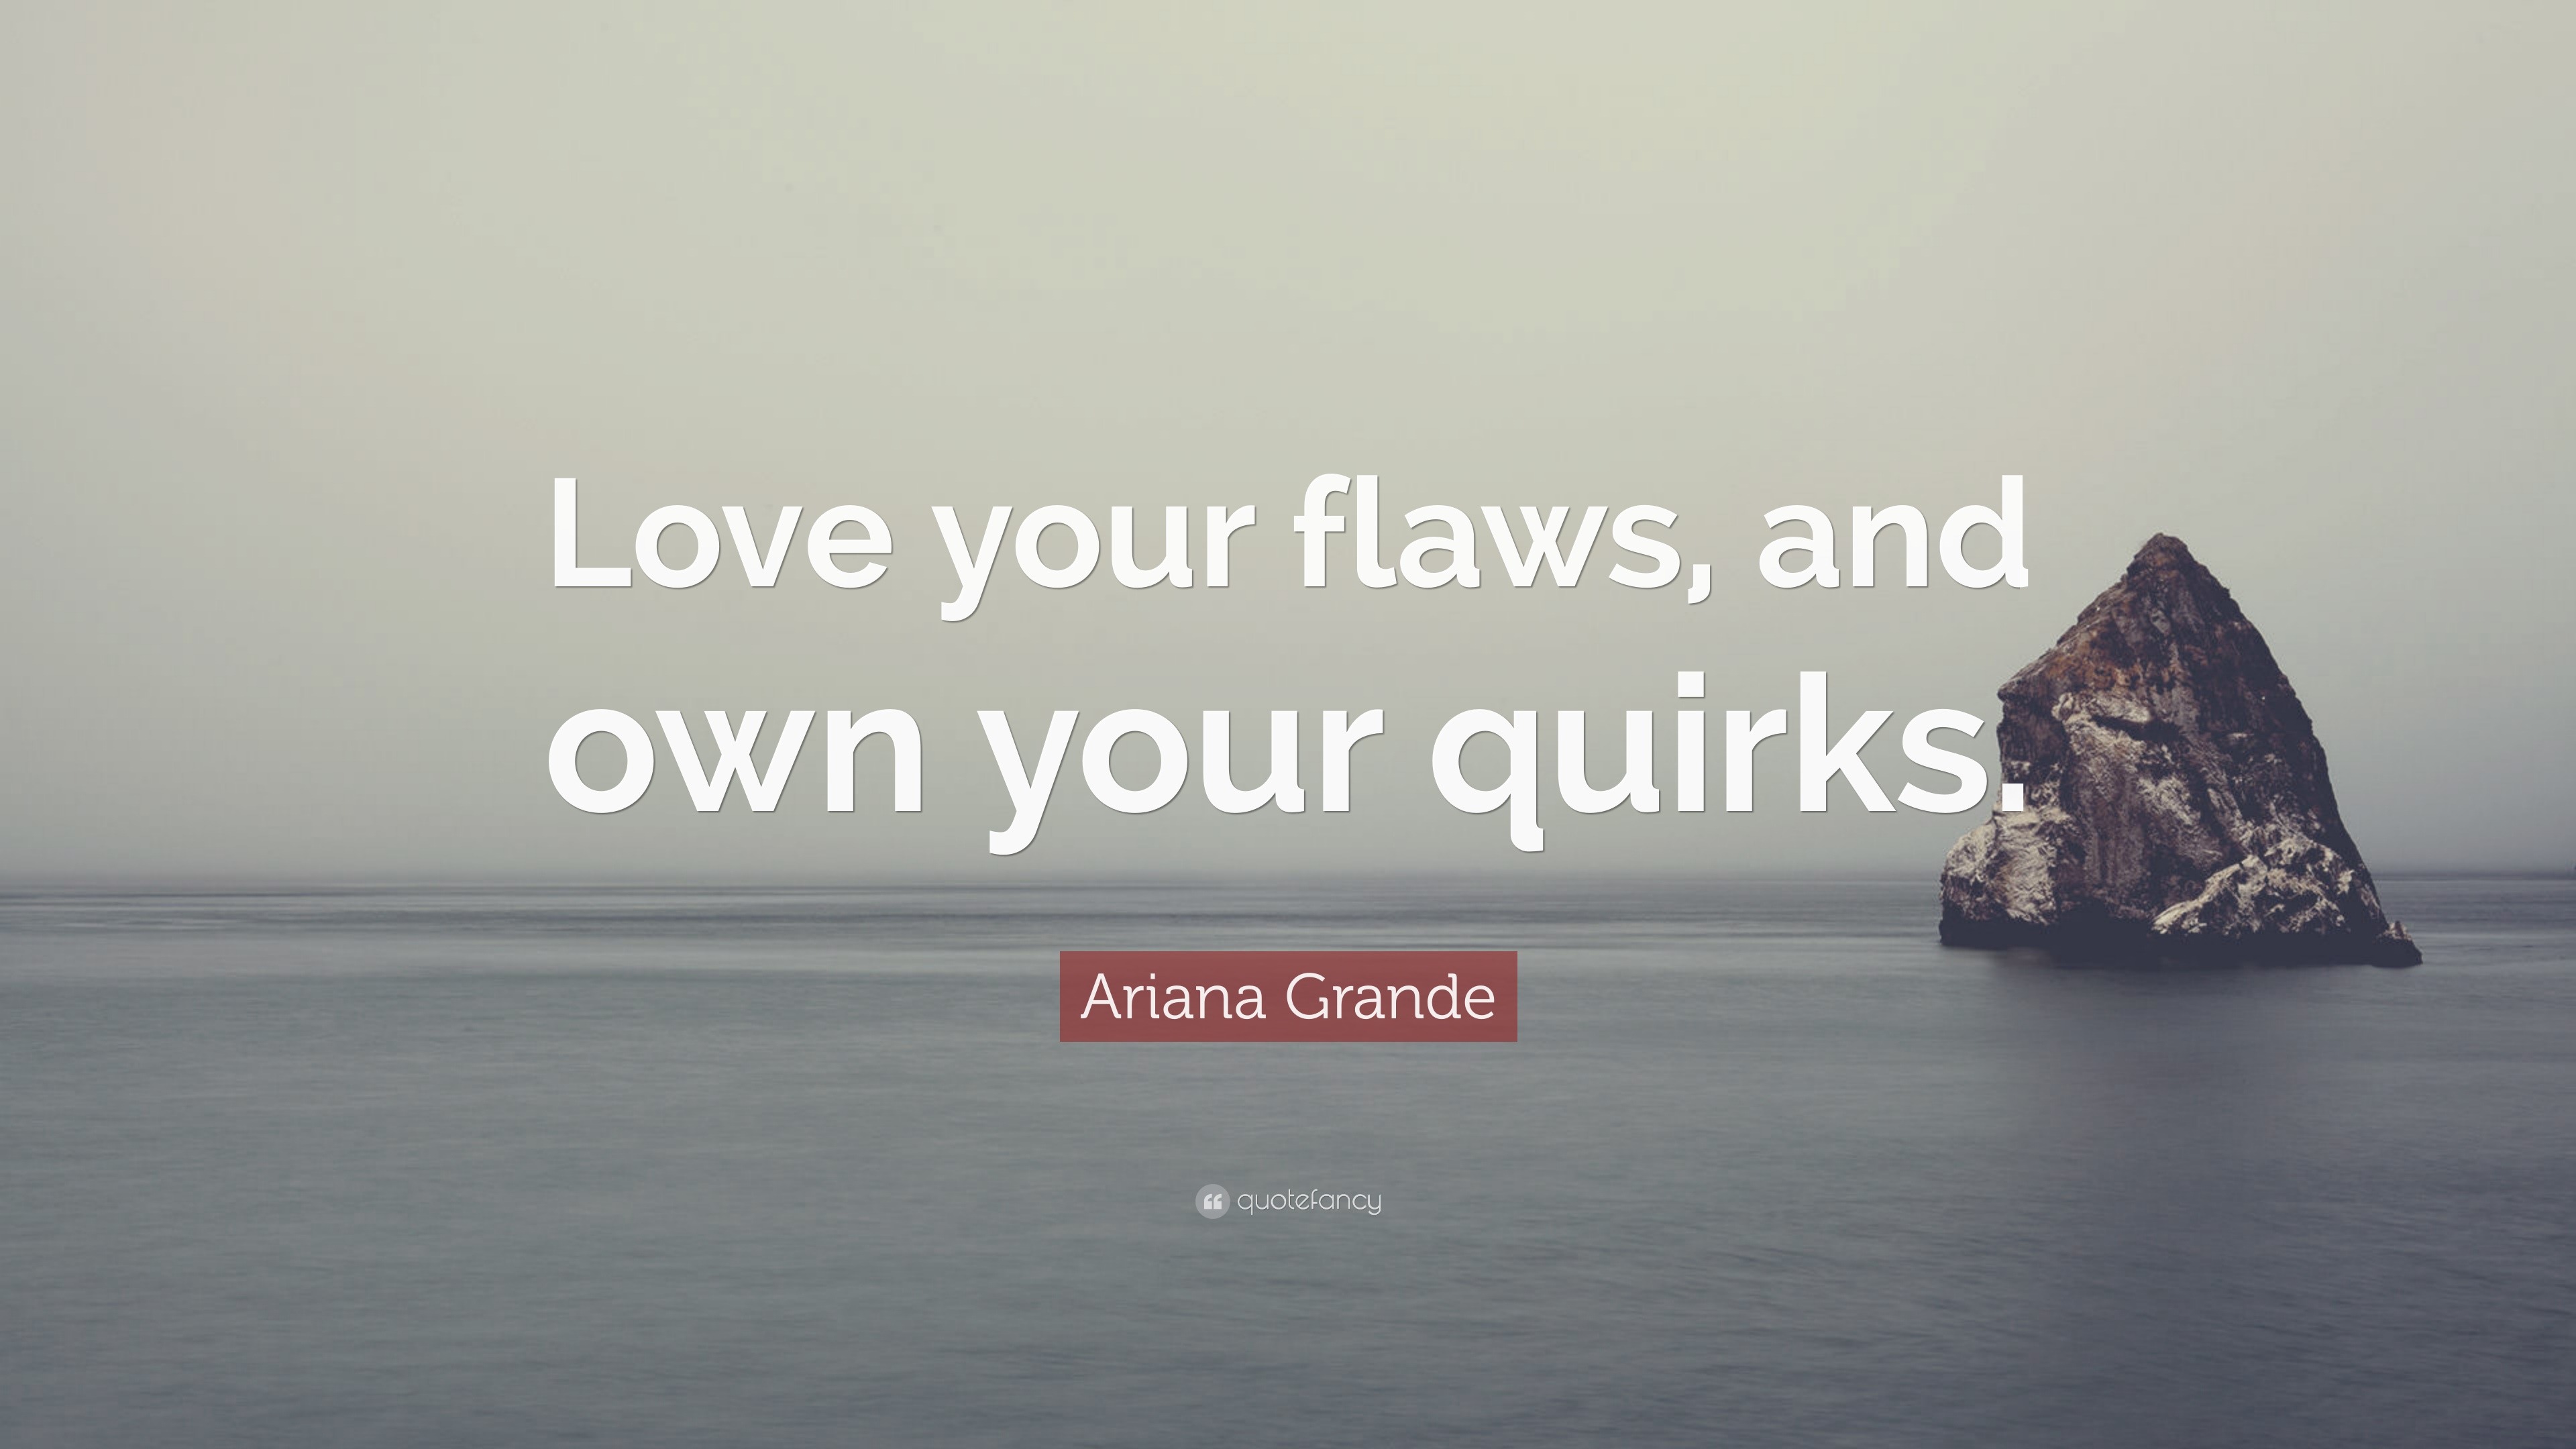 ariana grande love quotes